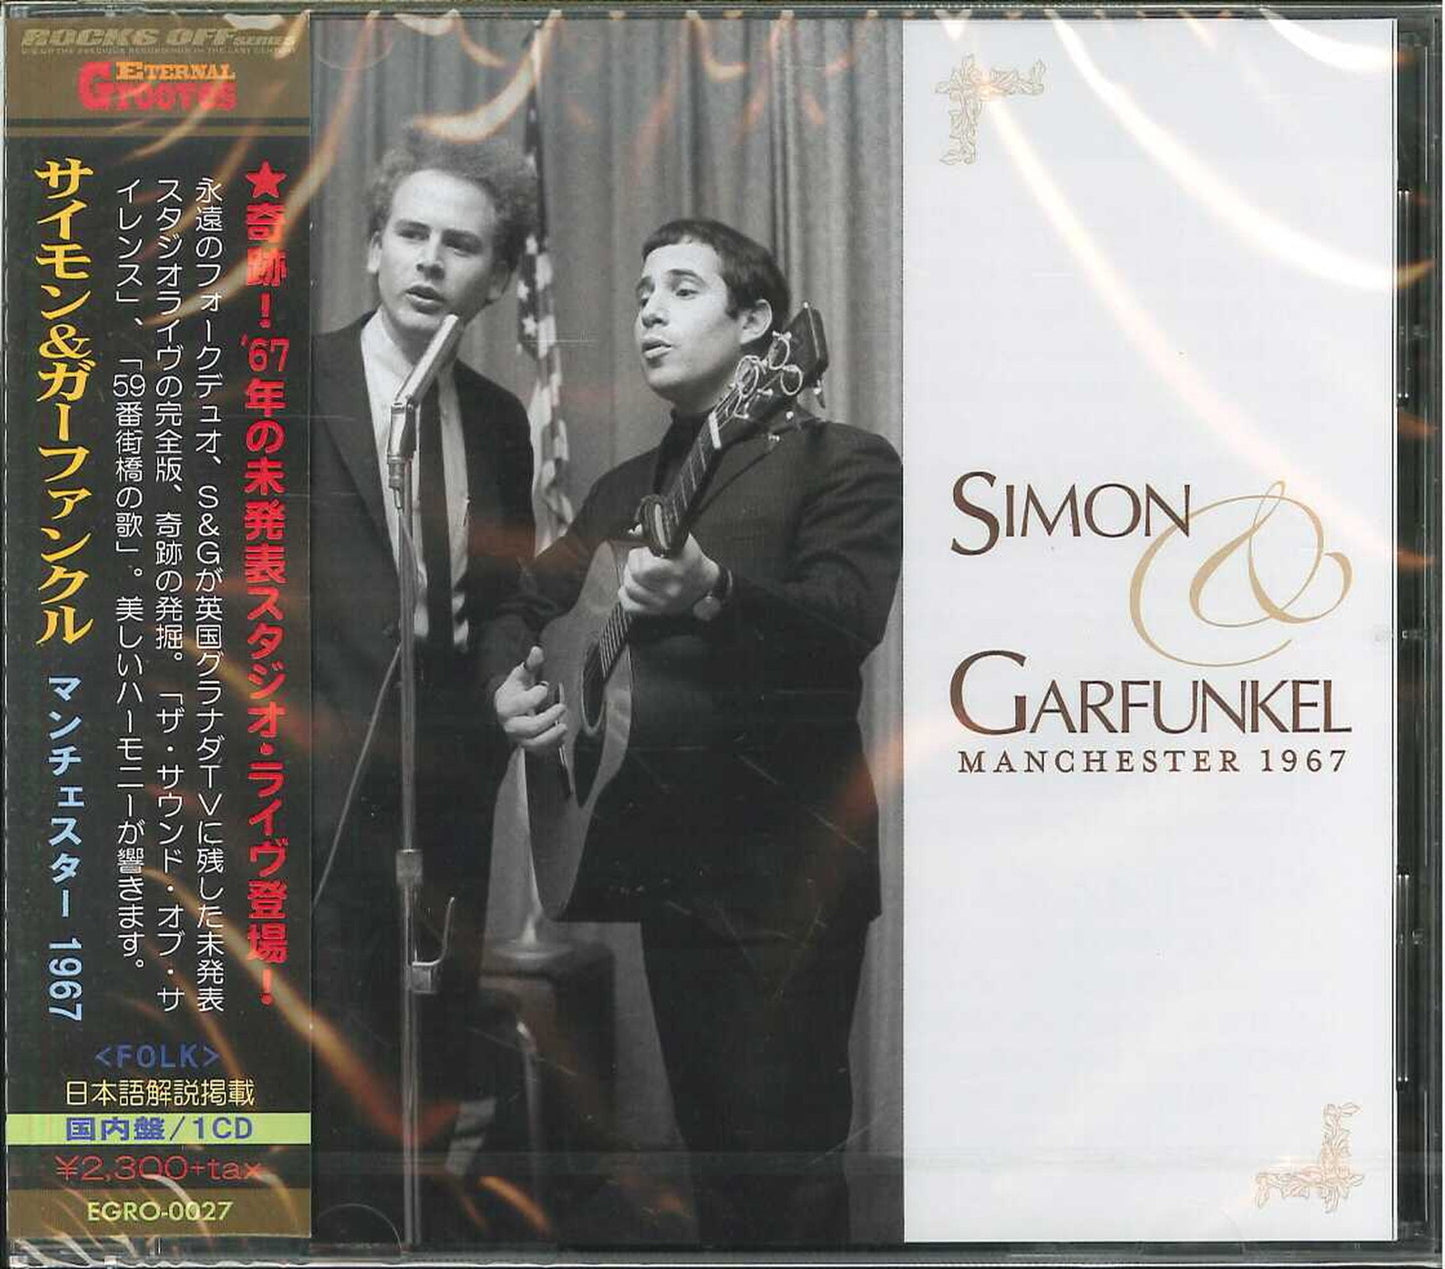 Simon & Garfunkel - Manchester 1967 - Japan CD